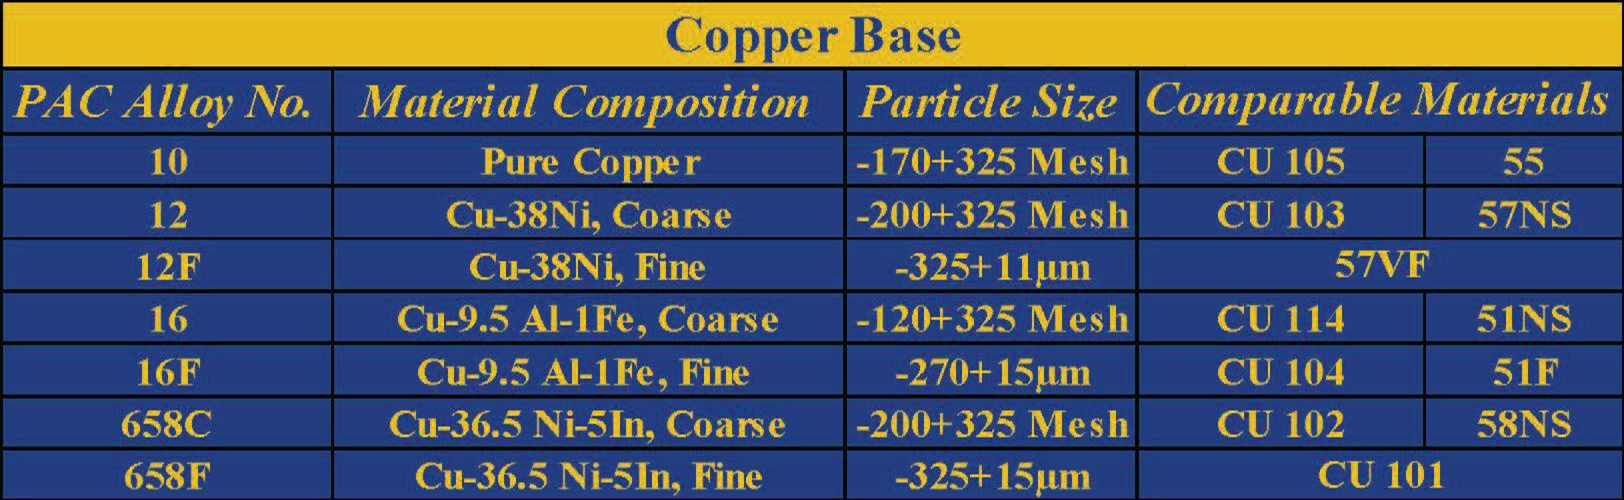 Copper Base